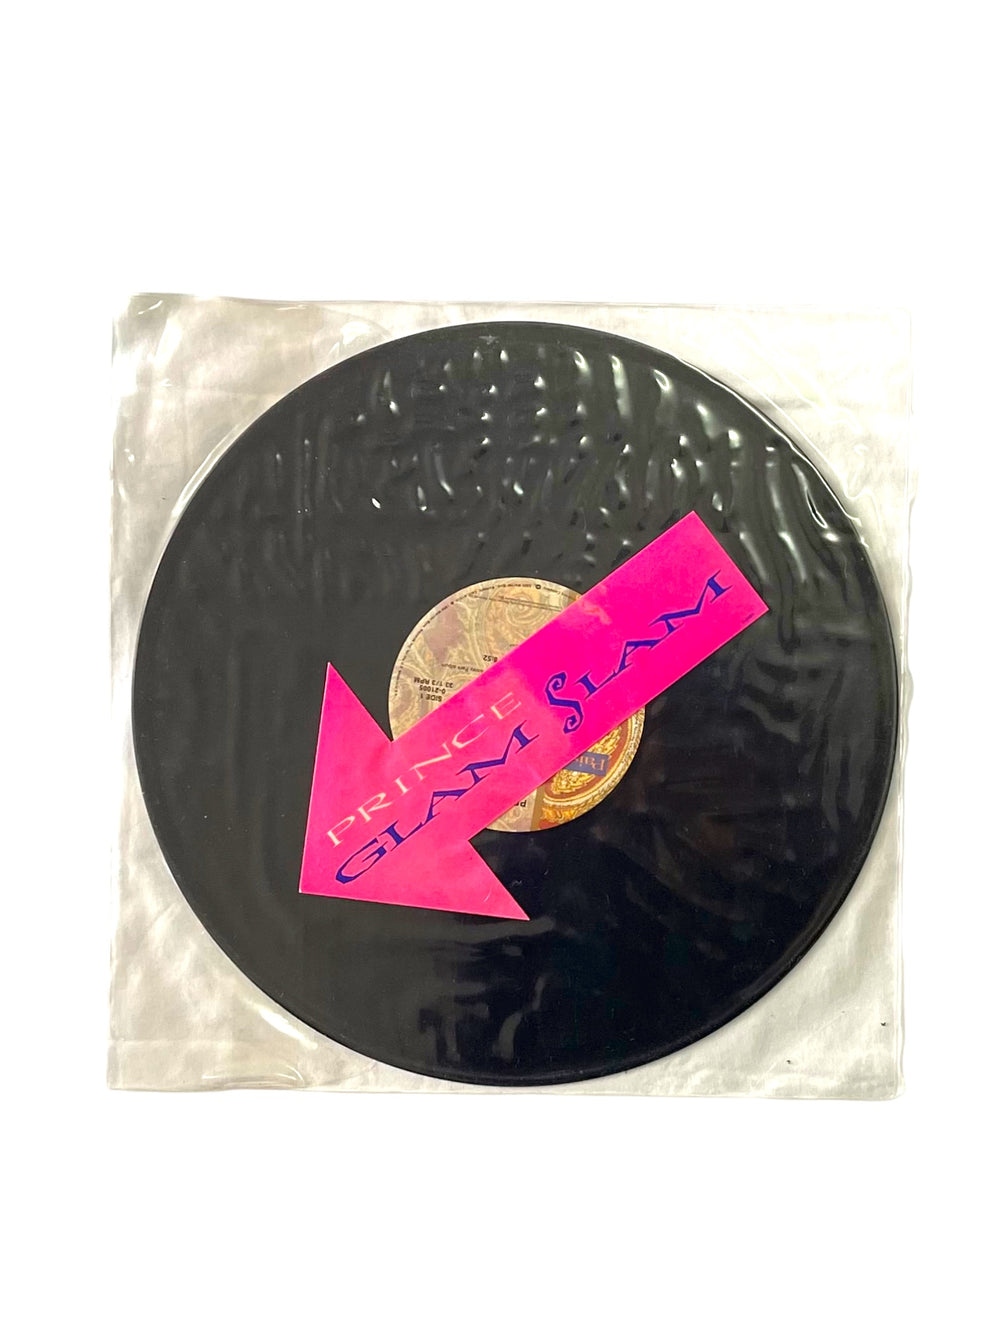 Prince –  Glam Slam / Escape 12 Vinyl 1988 USA Release